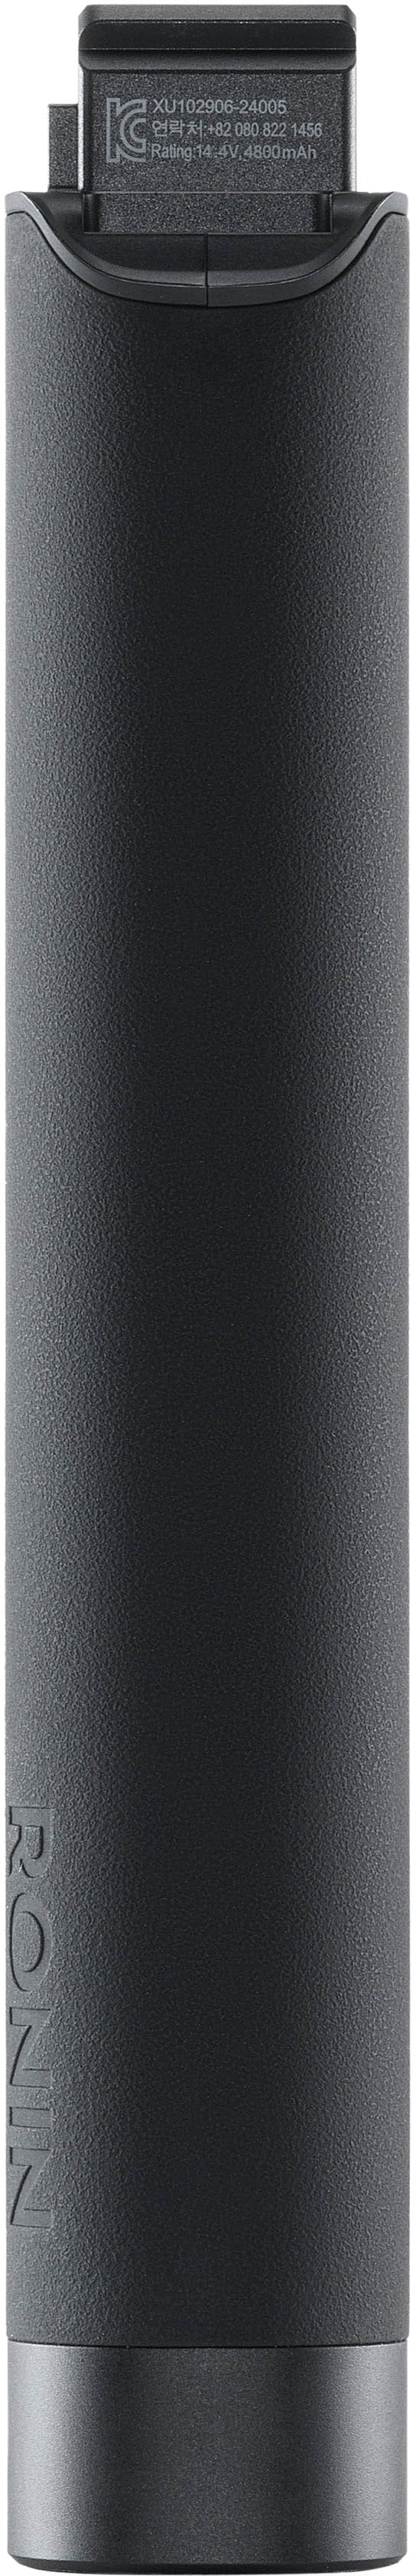 DJI - RS BG70 High-Capacity Battery Grip - Black_0